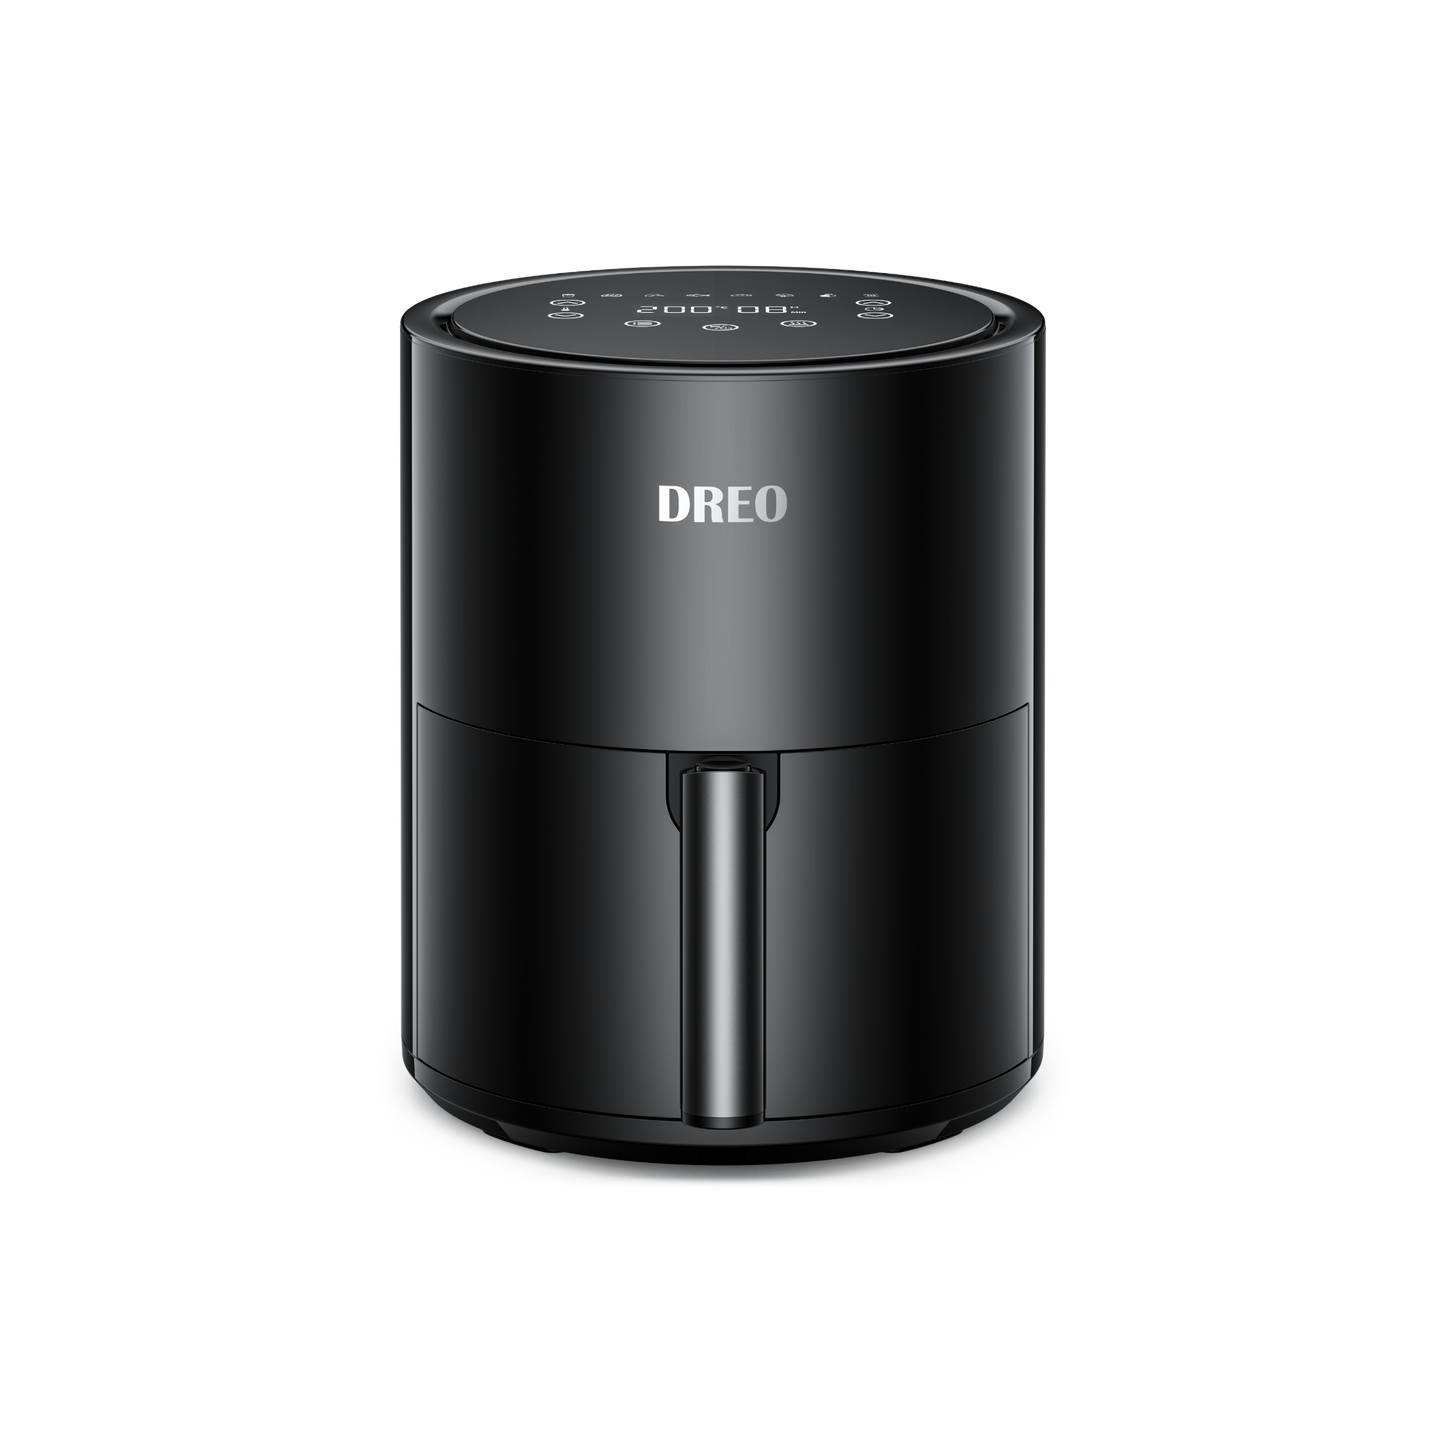 Dreo Fully Functional Aircrisp Pro 4 Quart Air Fryer - Dreo